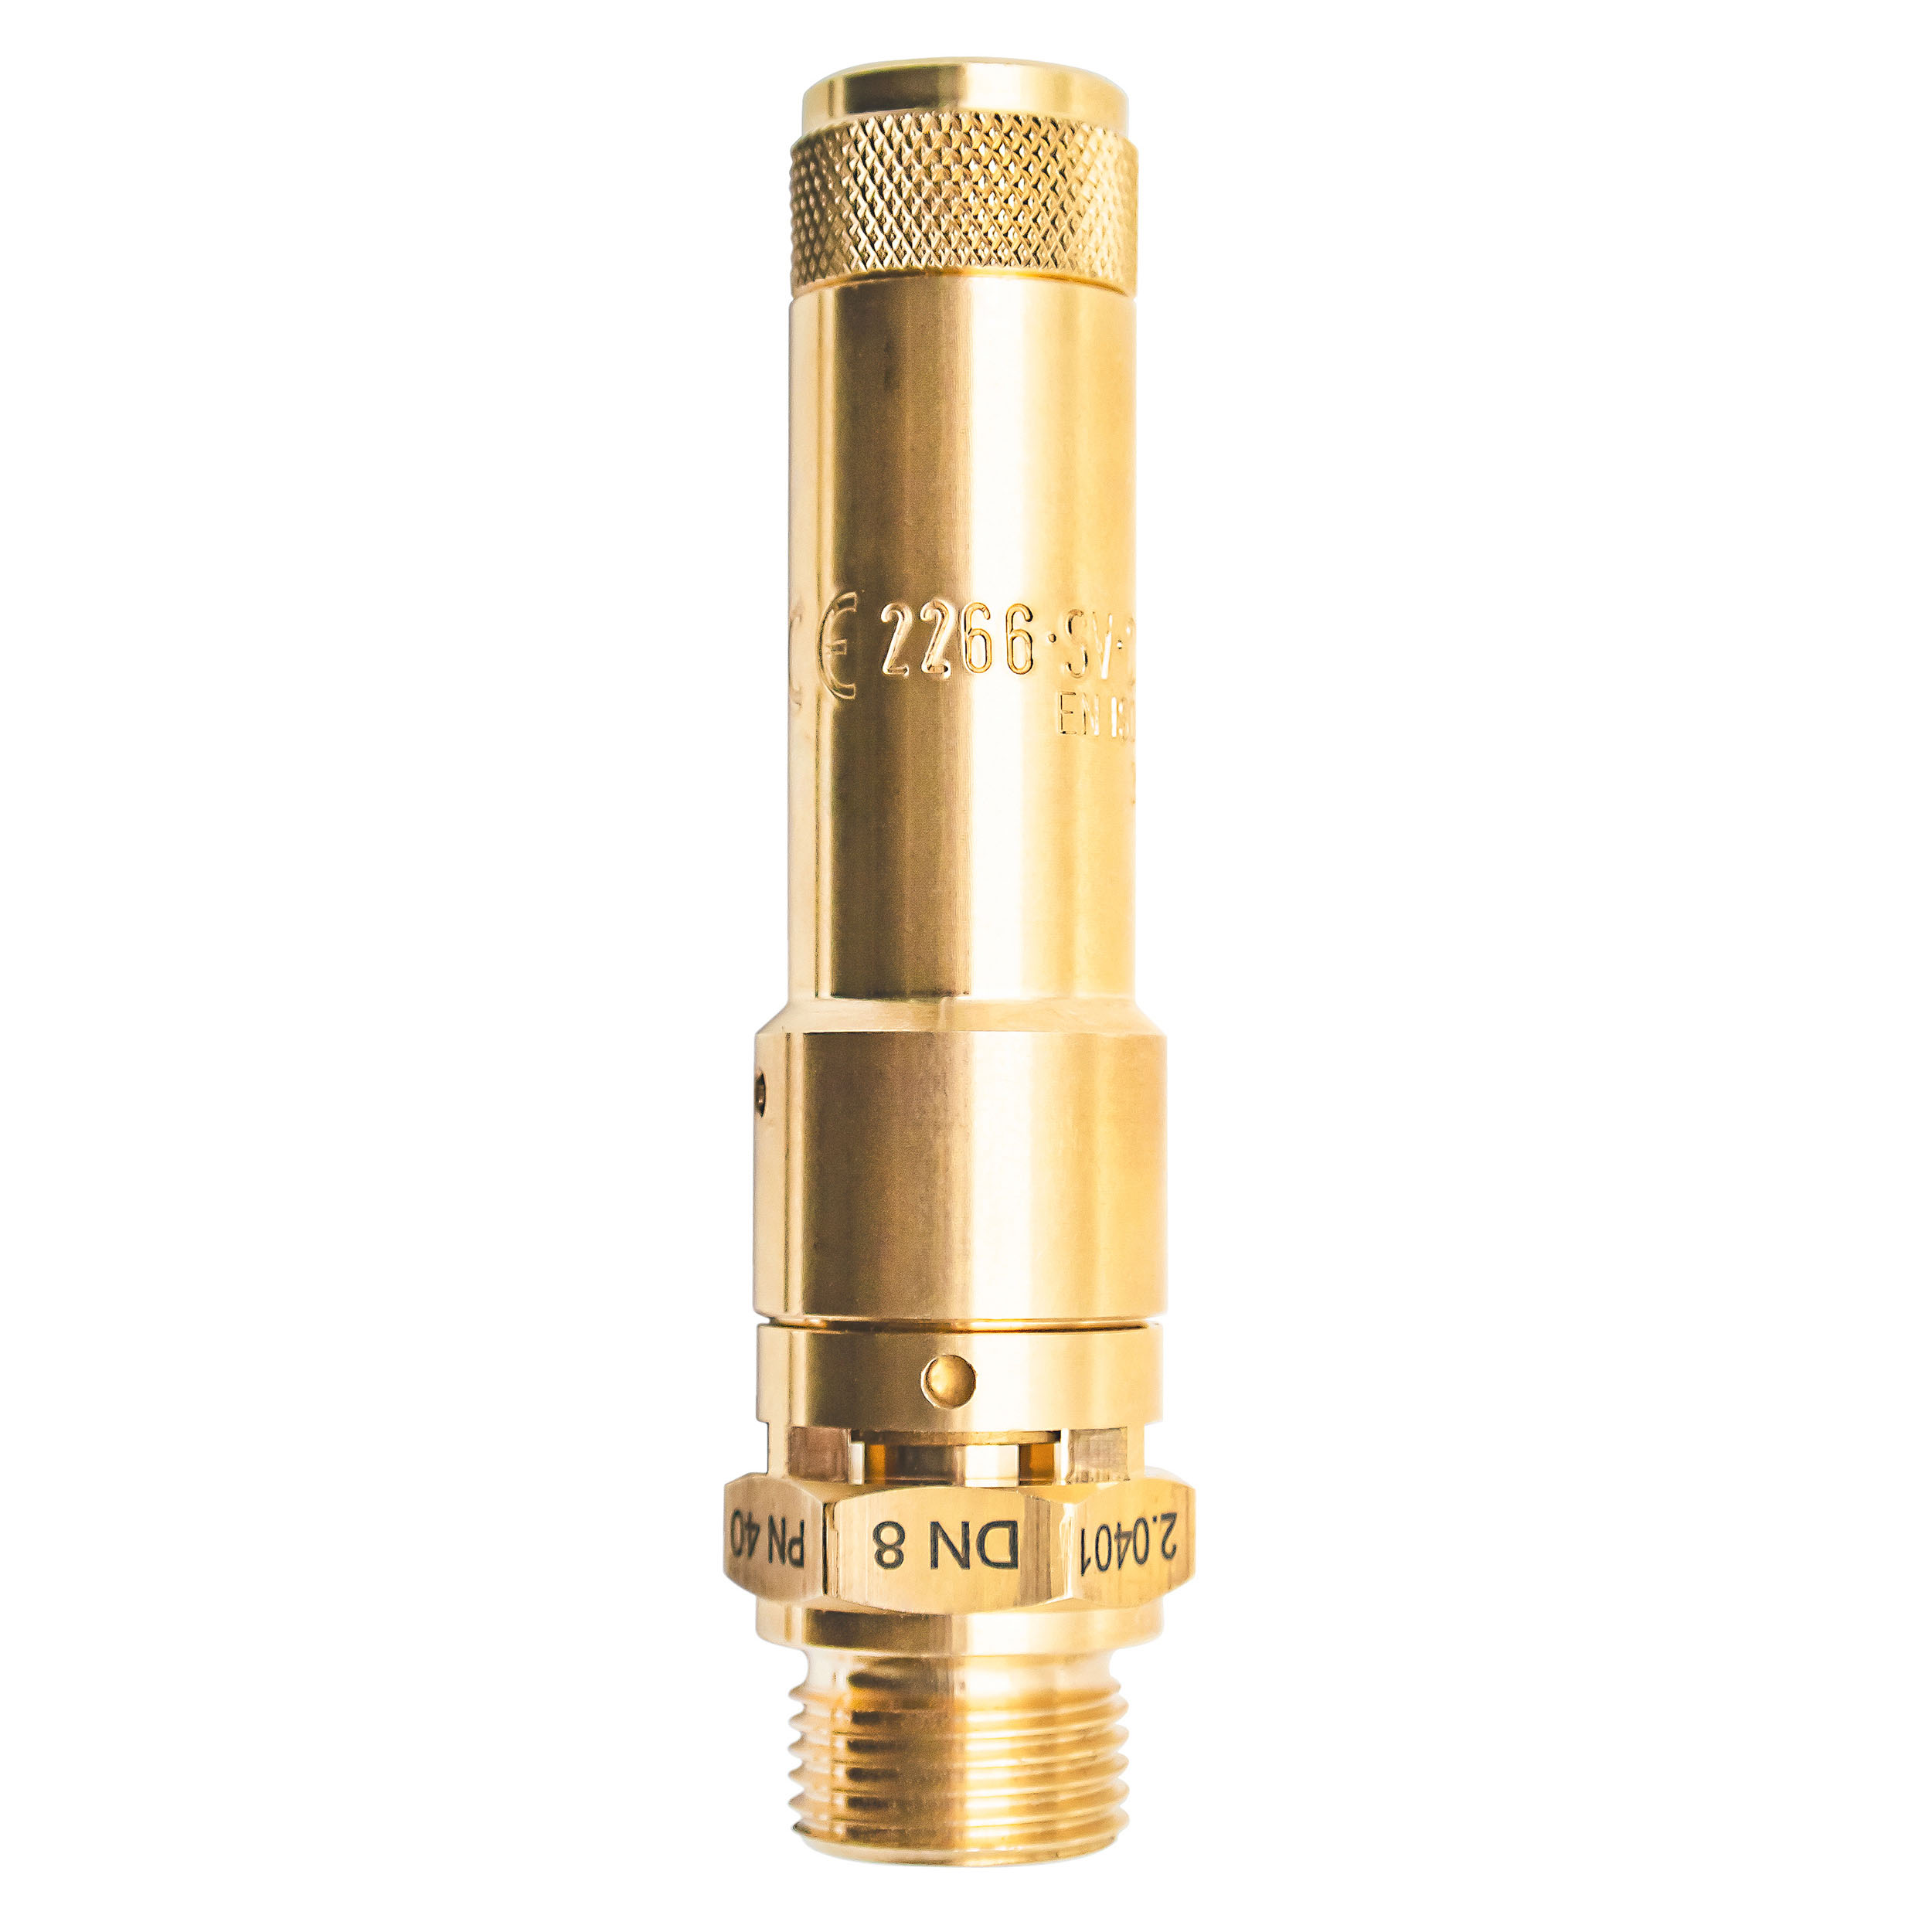 Savety valve component tested DN 8, G¼, set pressure: 1.1 bar (15,95 psi)